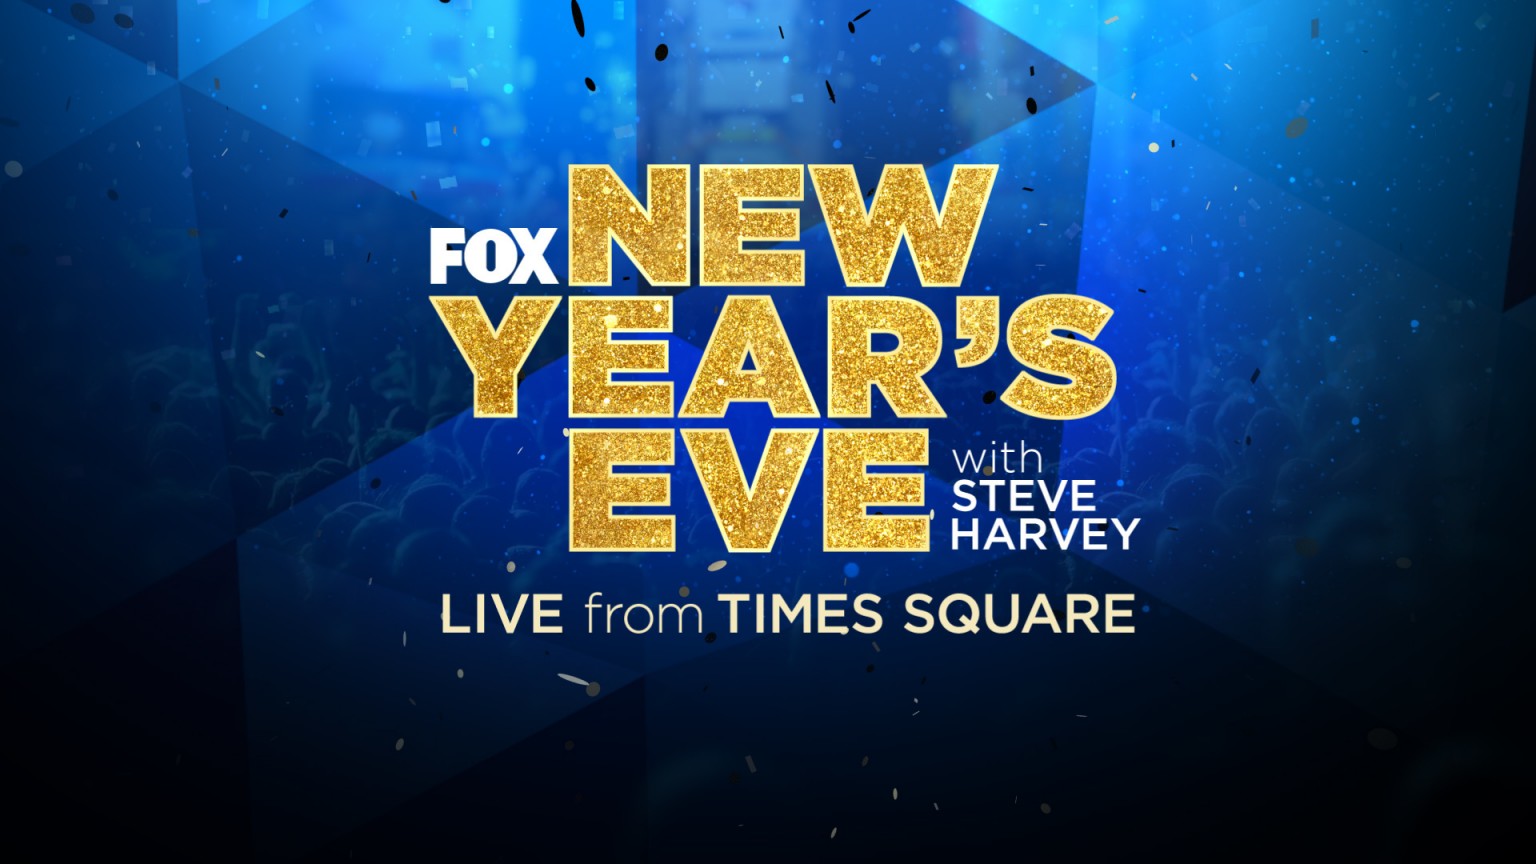 STEVE HARVEY COUNTS DOWN TO 2020 ON “FOX’S NEW YEAR’S EVE WITH STEVE